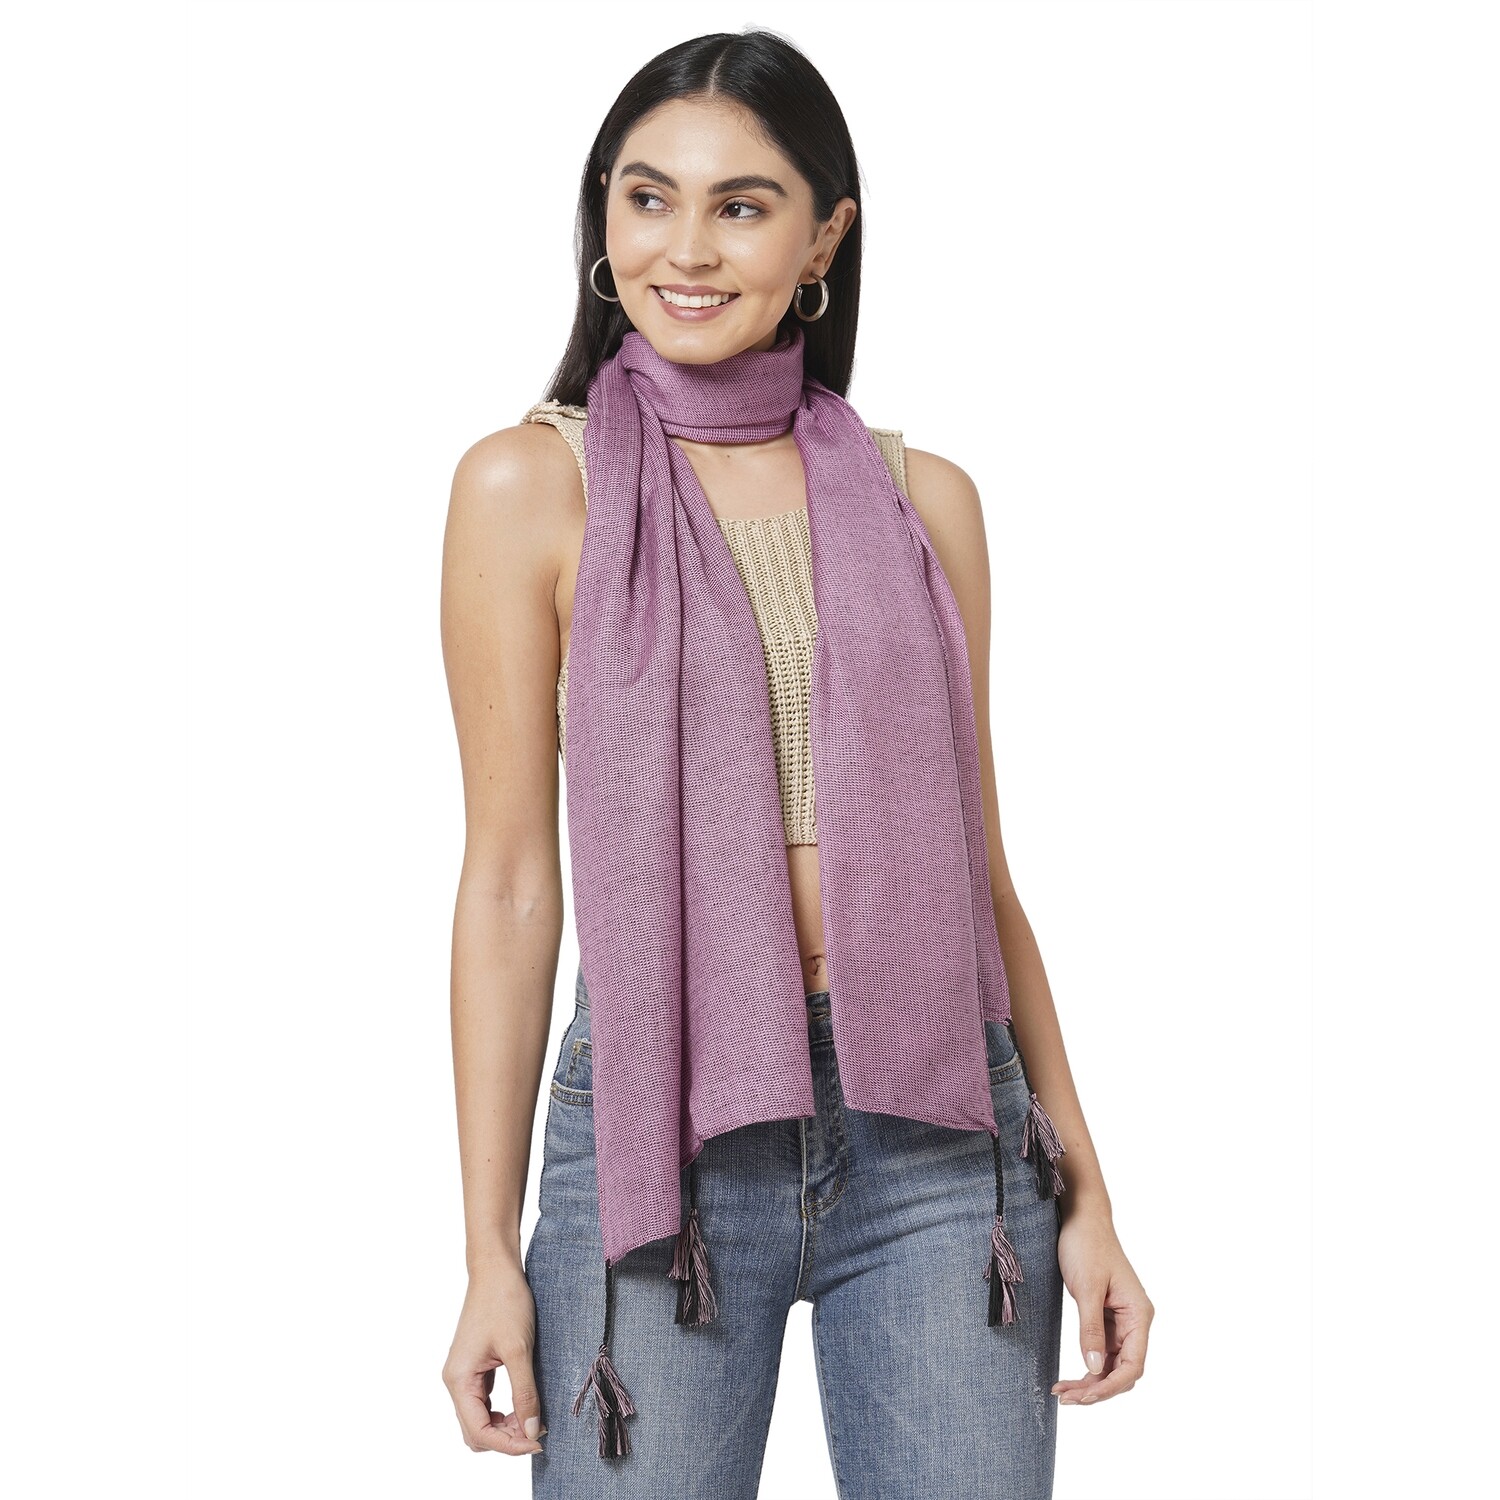 solid color plain mid size scarves